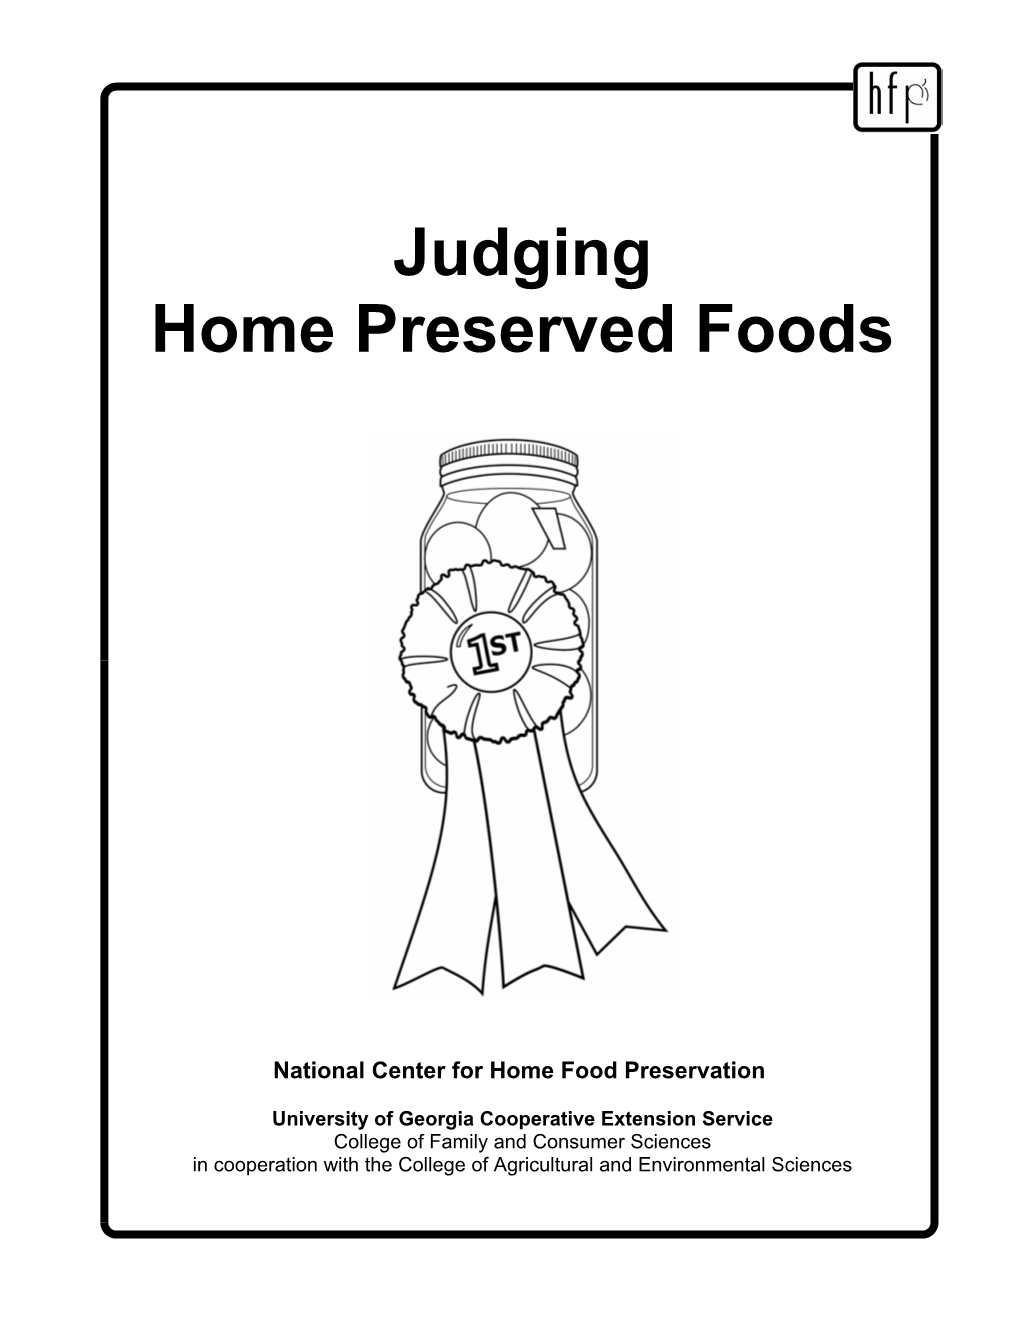 Judging Home Preserved Foods